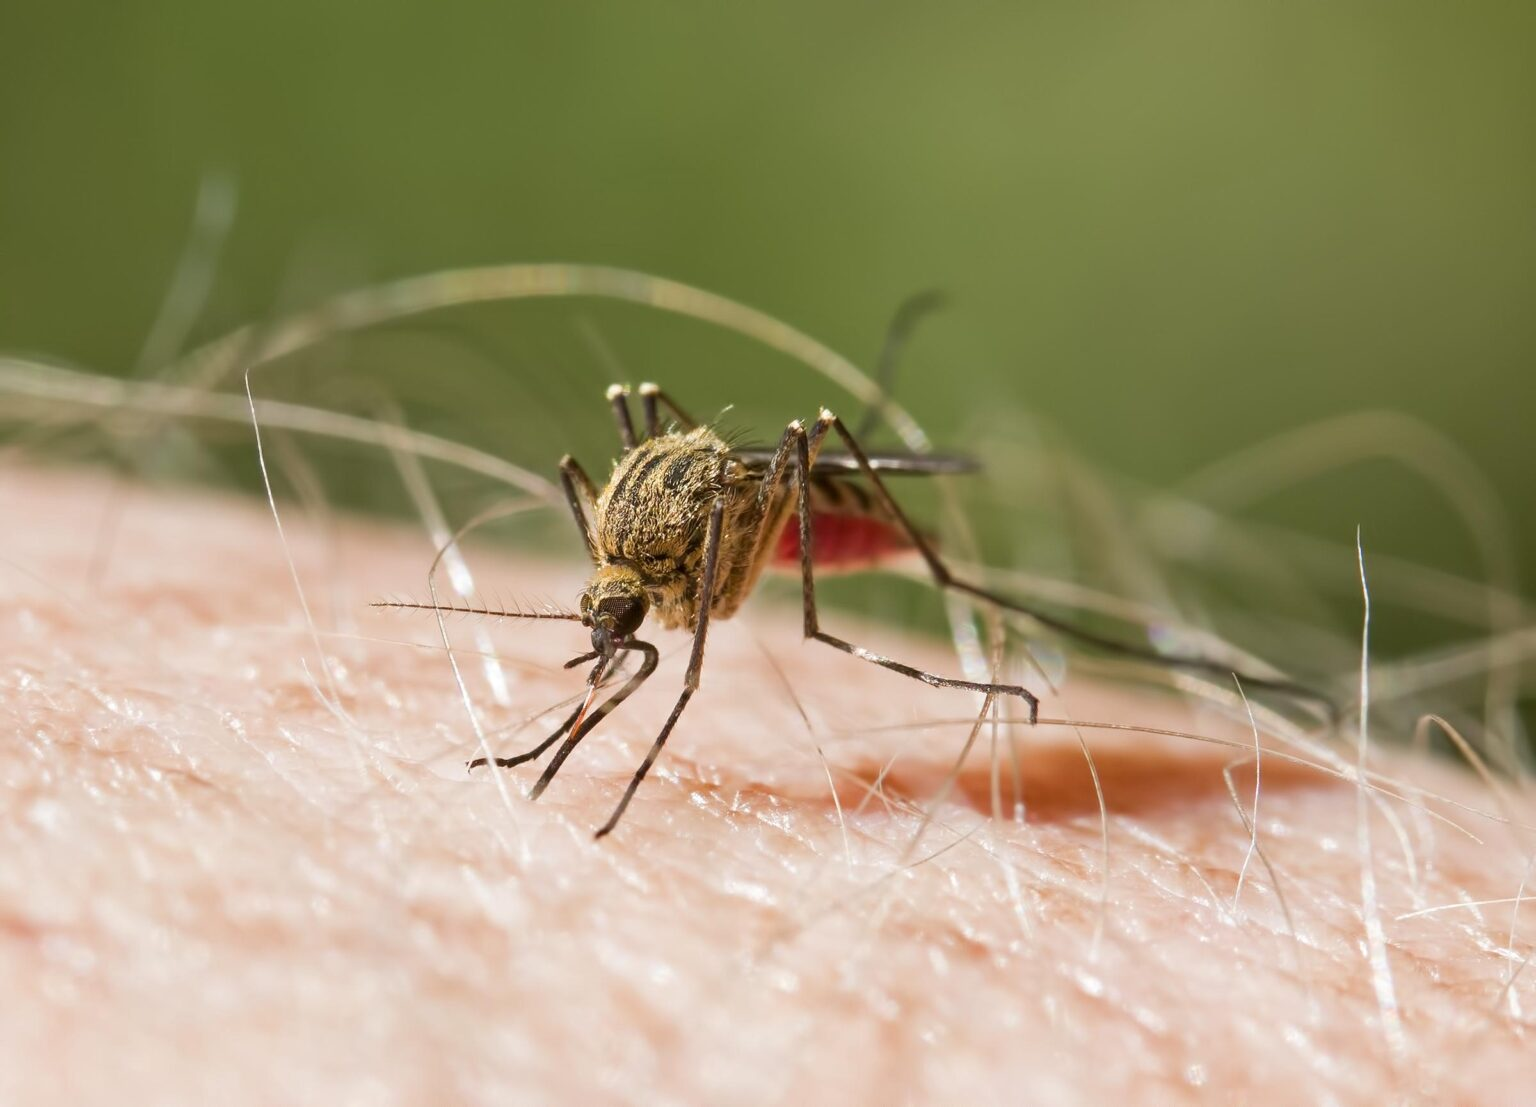 Ultrasensitive tools to detect asymptomatic malaria